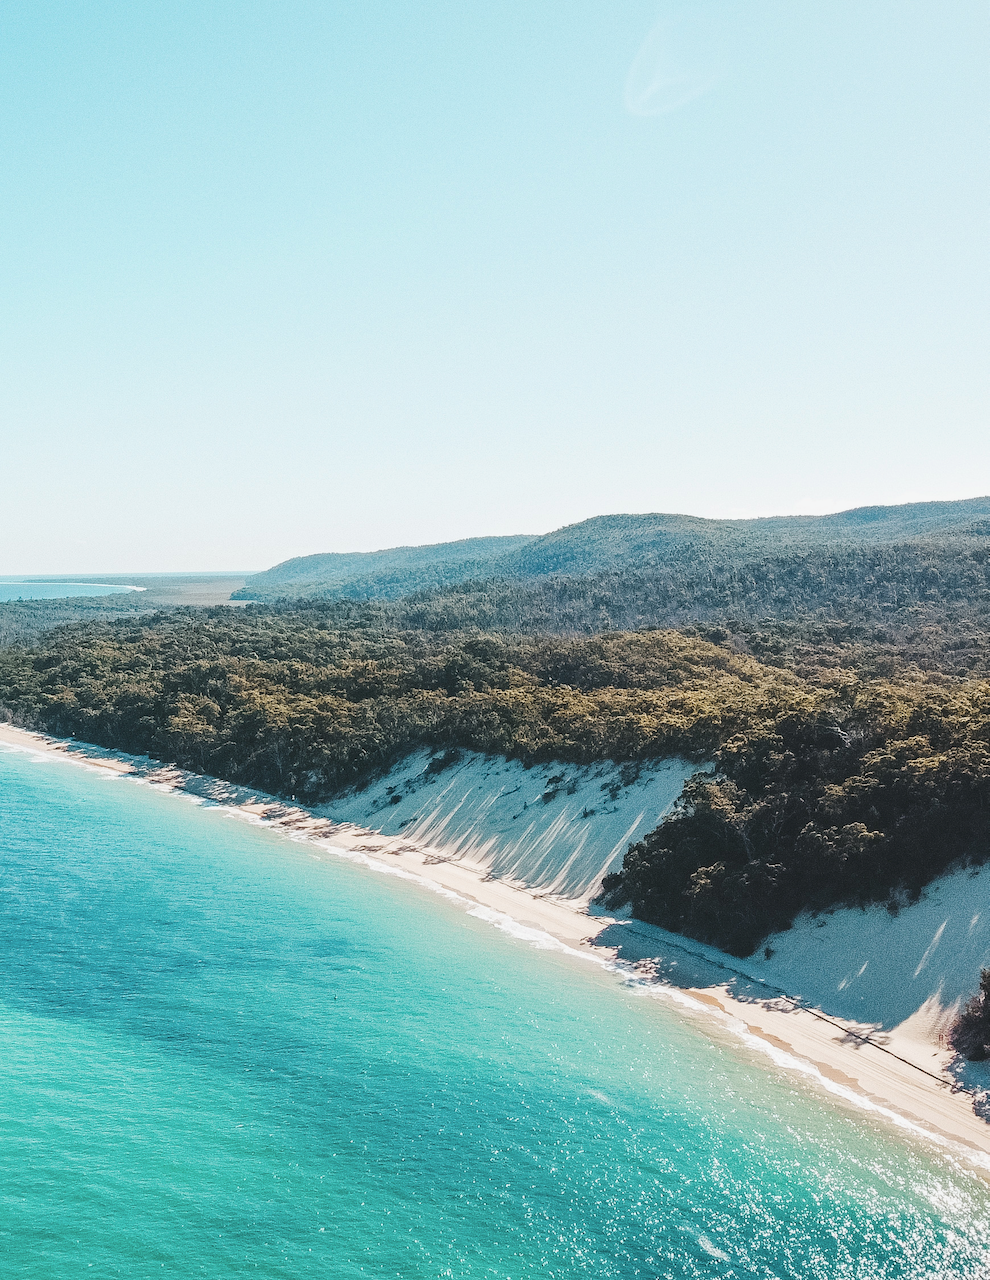 The Island seen by Drone - Moreton Island - Queensland - Australia